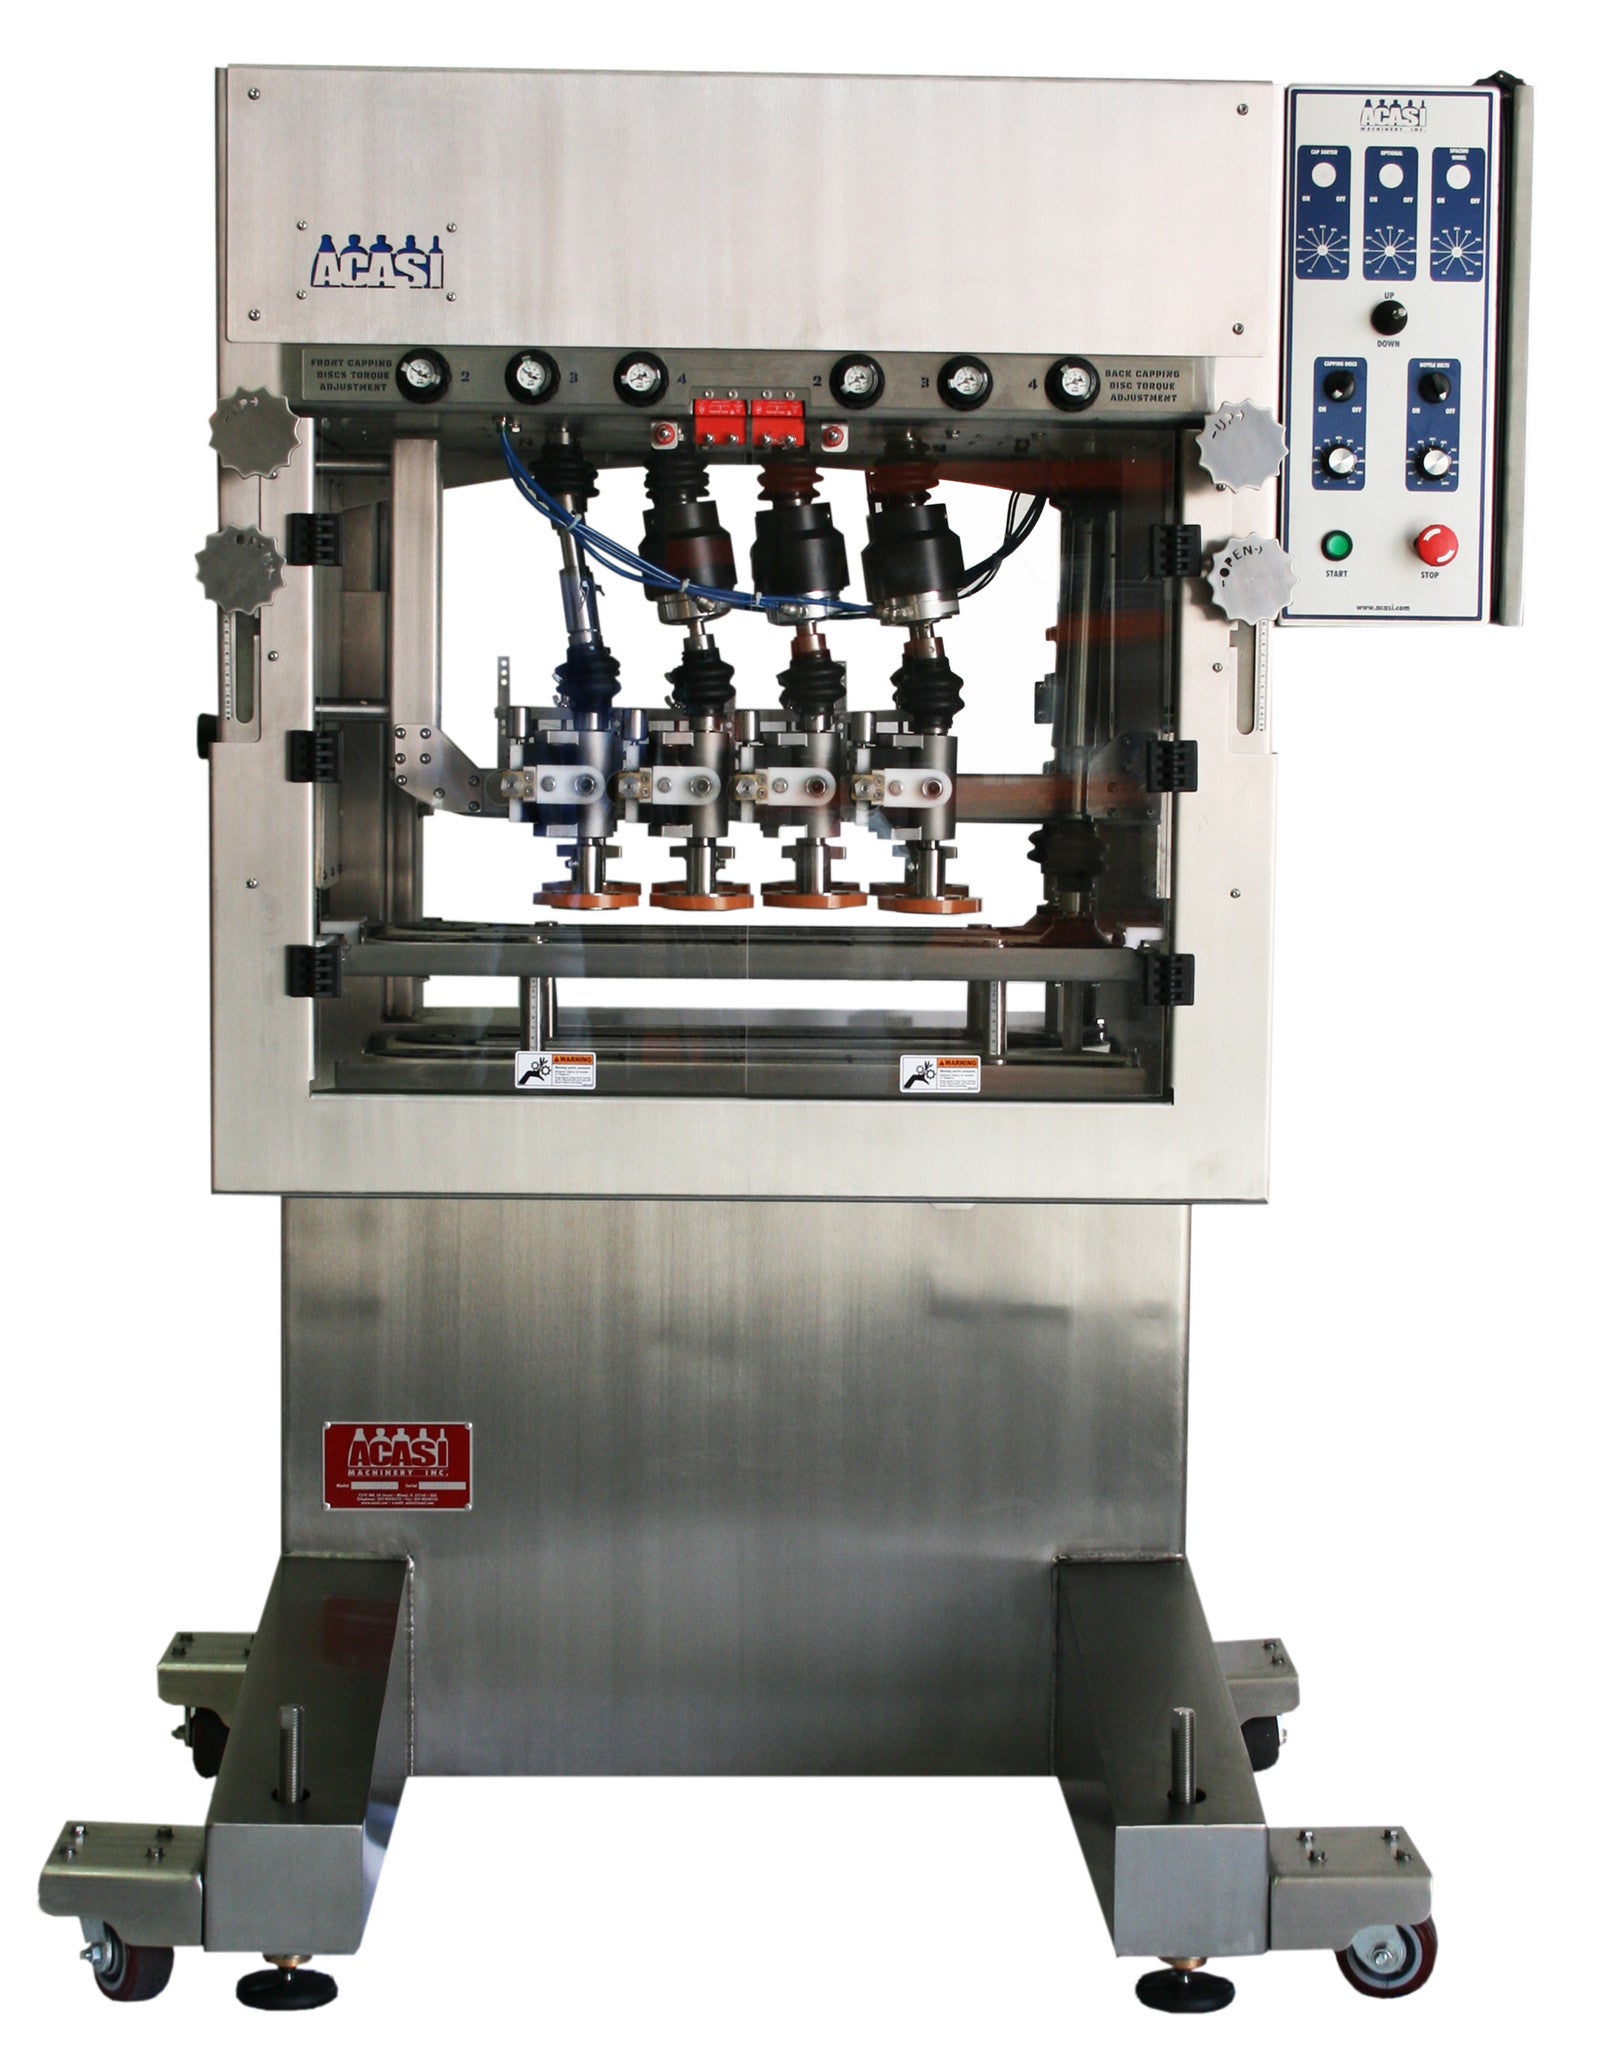 Automatic inline bottle cap tightener machine, model CAI, by Acasi  Machinery Inc.